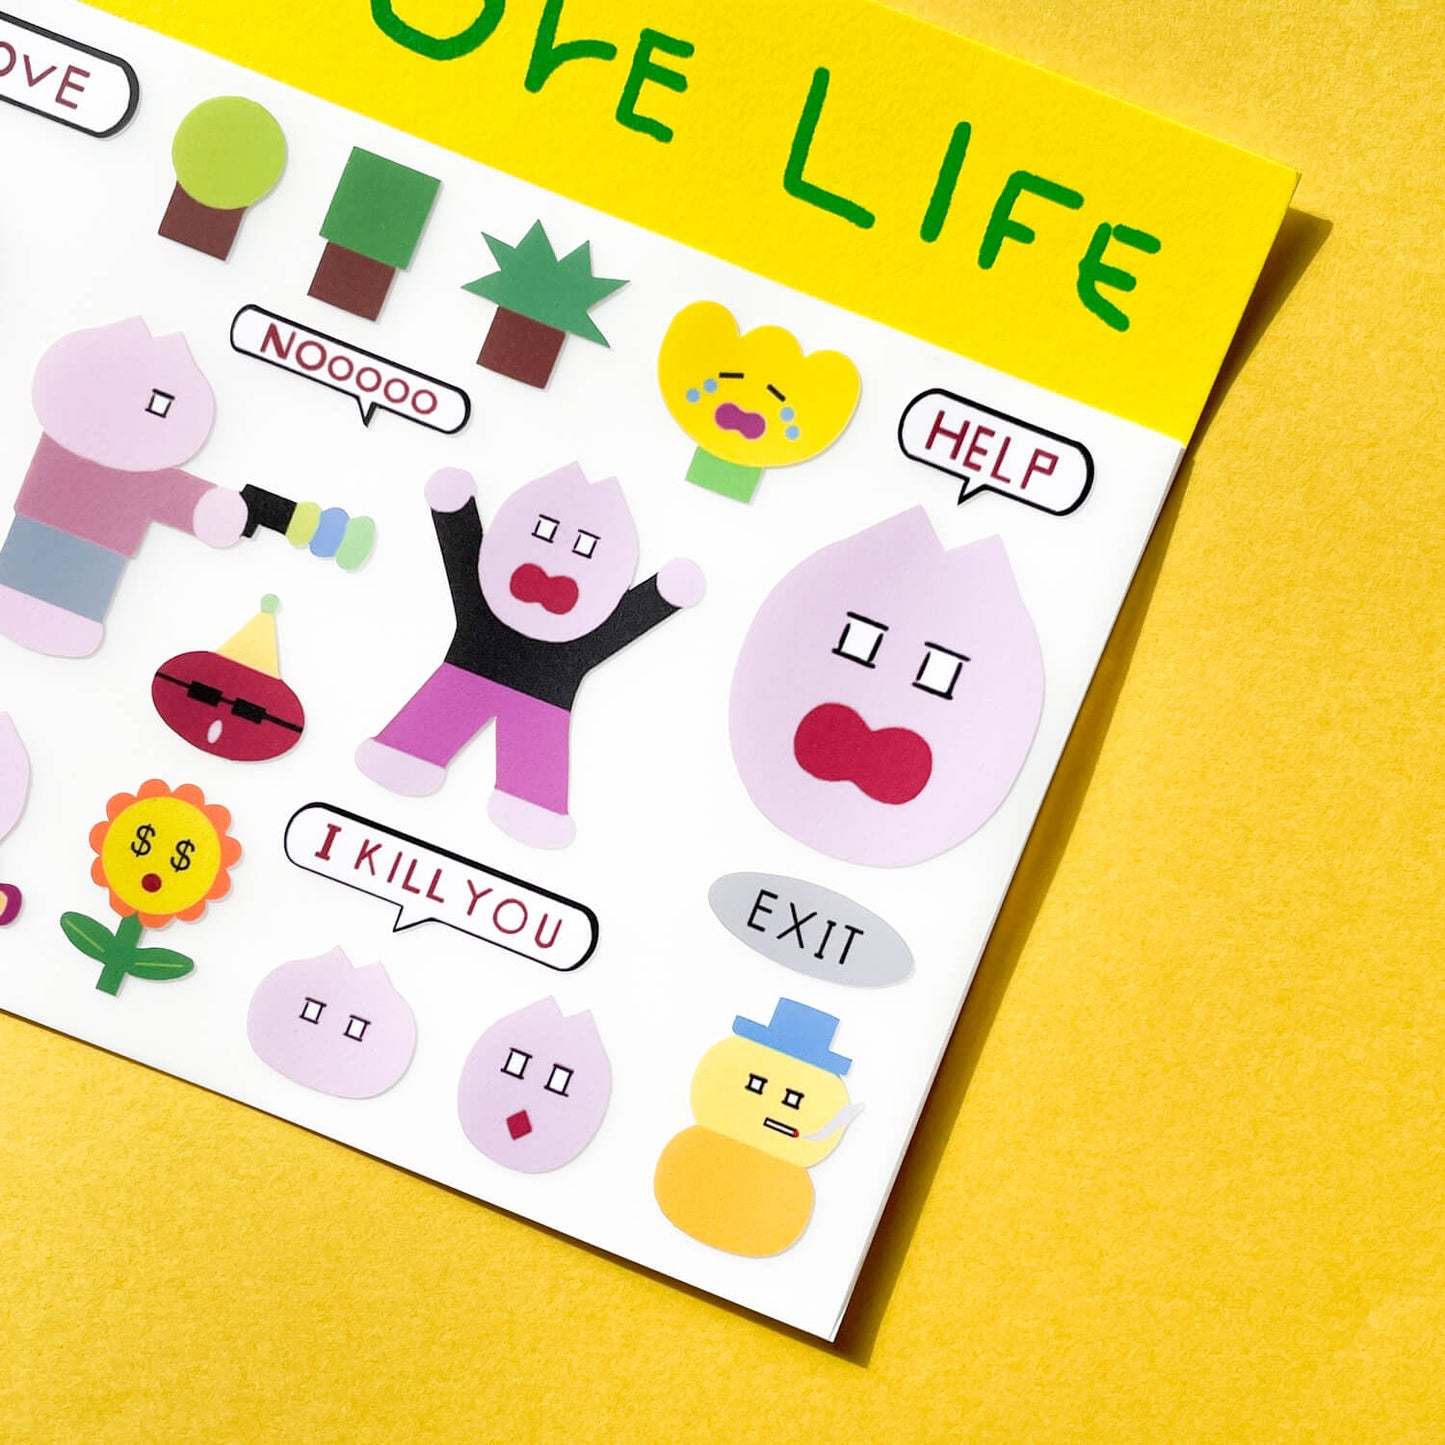 Sticker Sheet - no more life